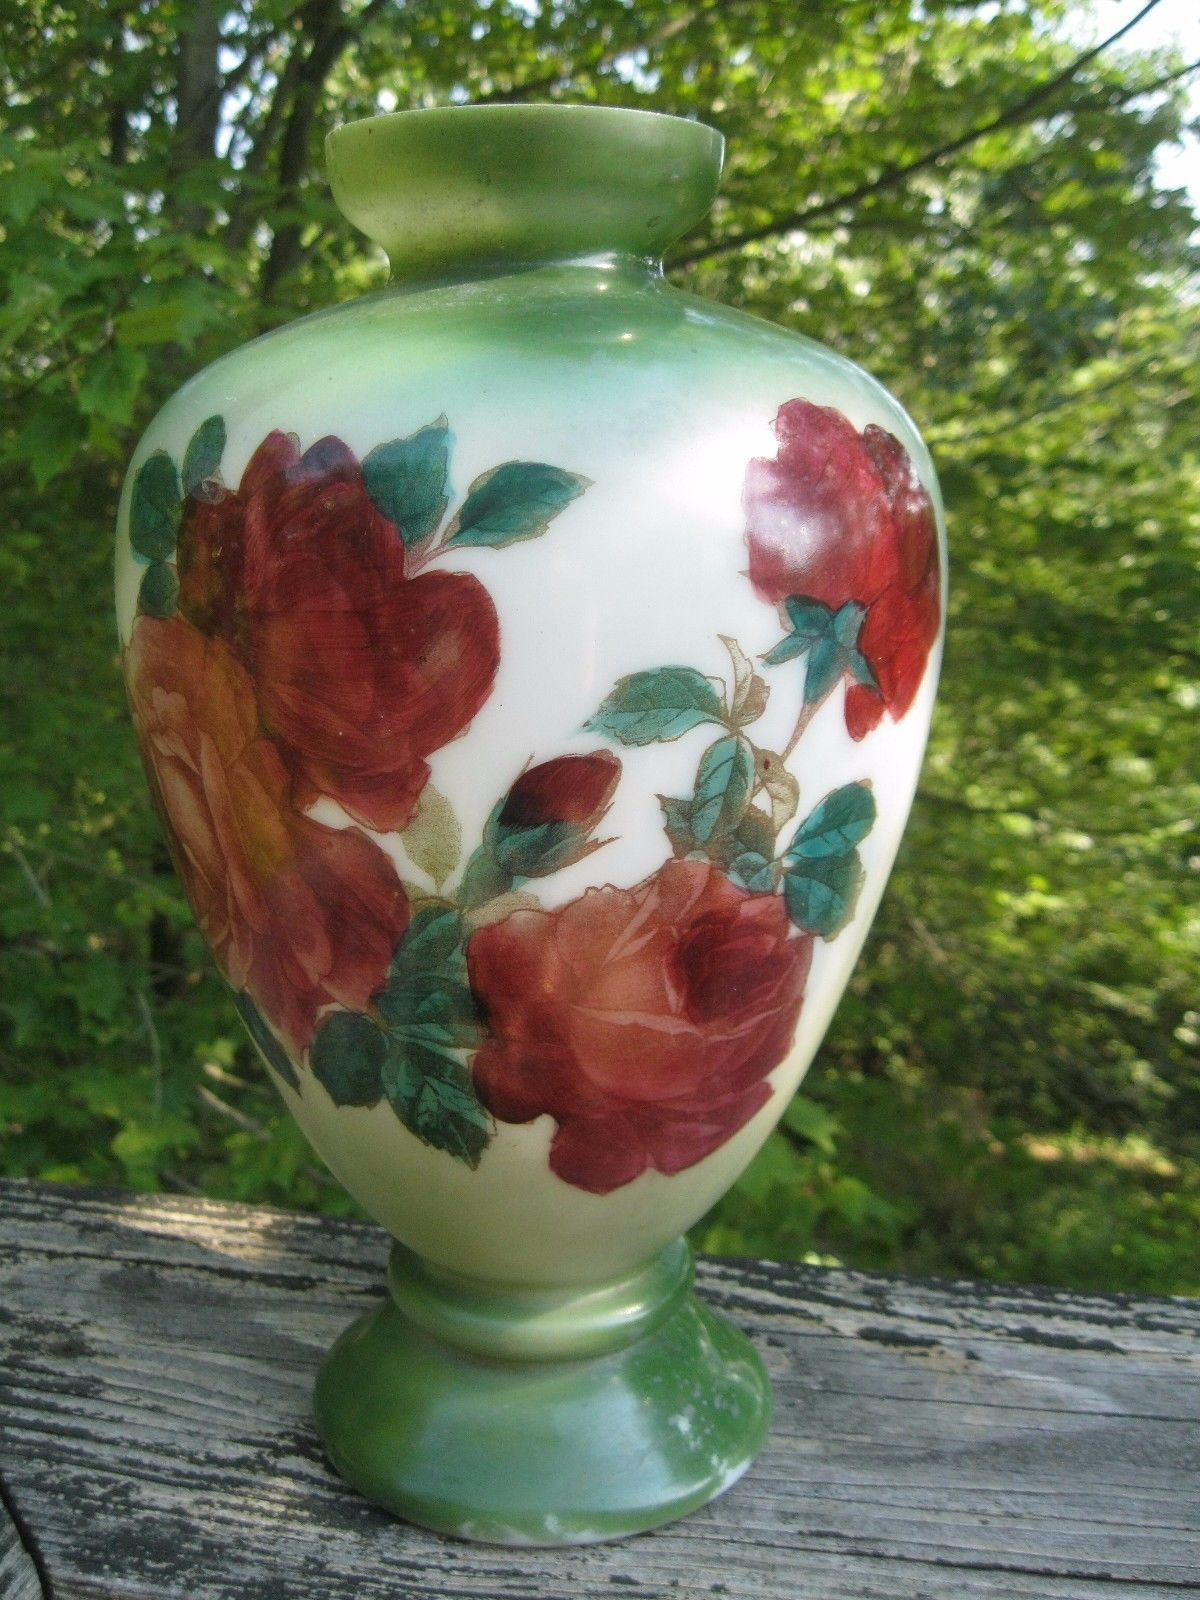 Belleek Vase Ebay Of Antique Bristol Glass Vase Green W Large Red Roses Lovely Victorian In Antique Bristol Glass Vase Green W Large Red Roses Lovely Victorian 12 Vintage Ebay